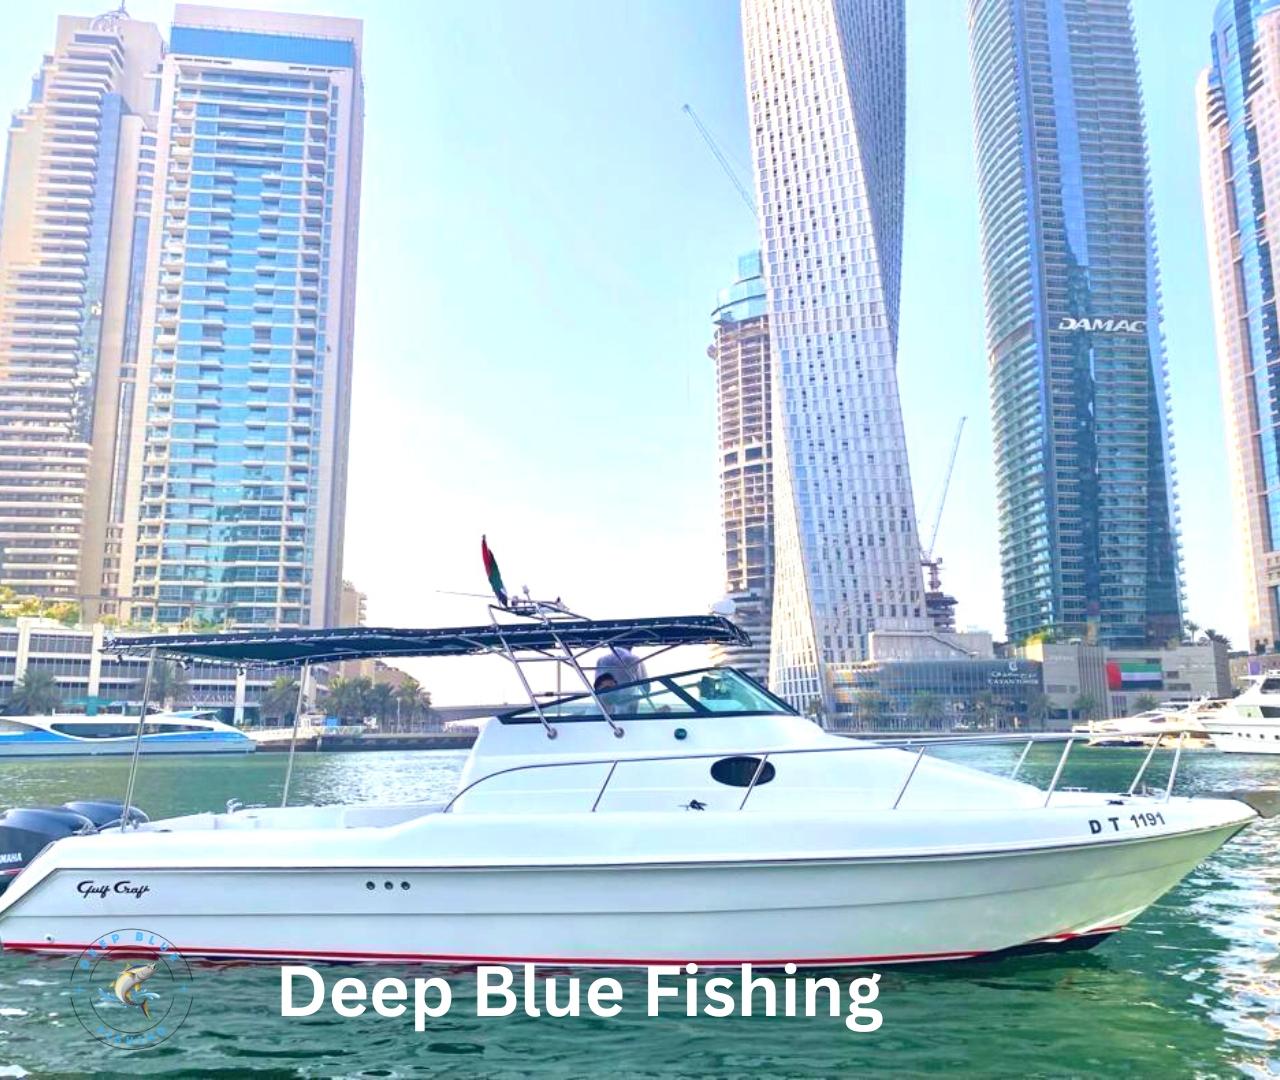 Gulf Craft 31 Ft- Deep Blue Fishing